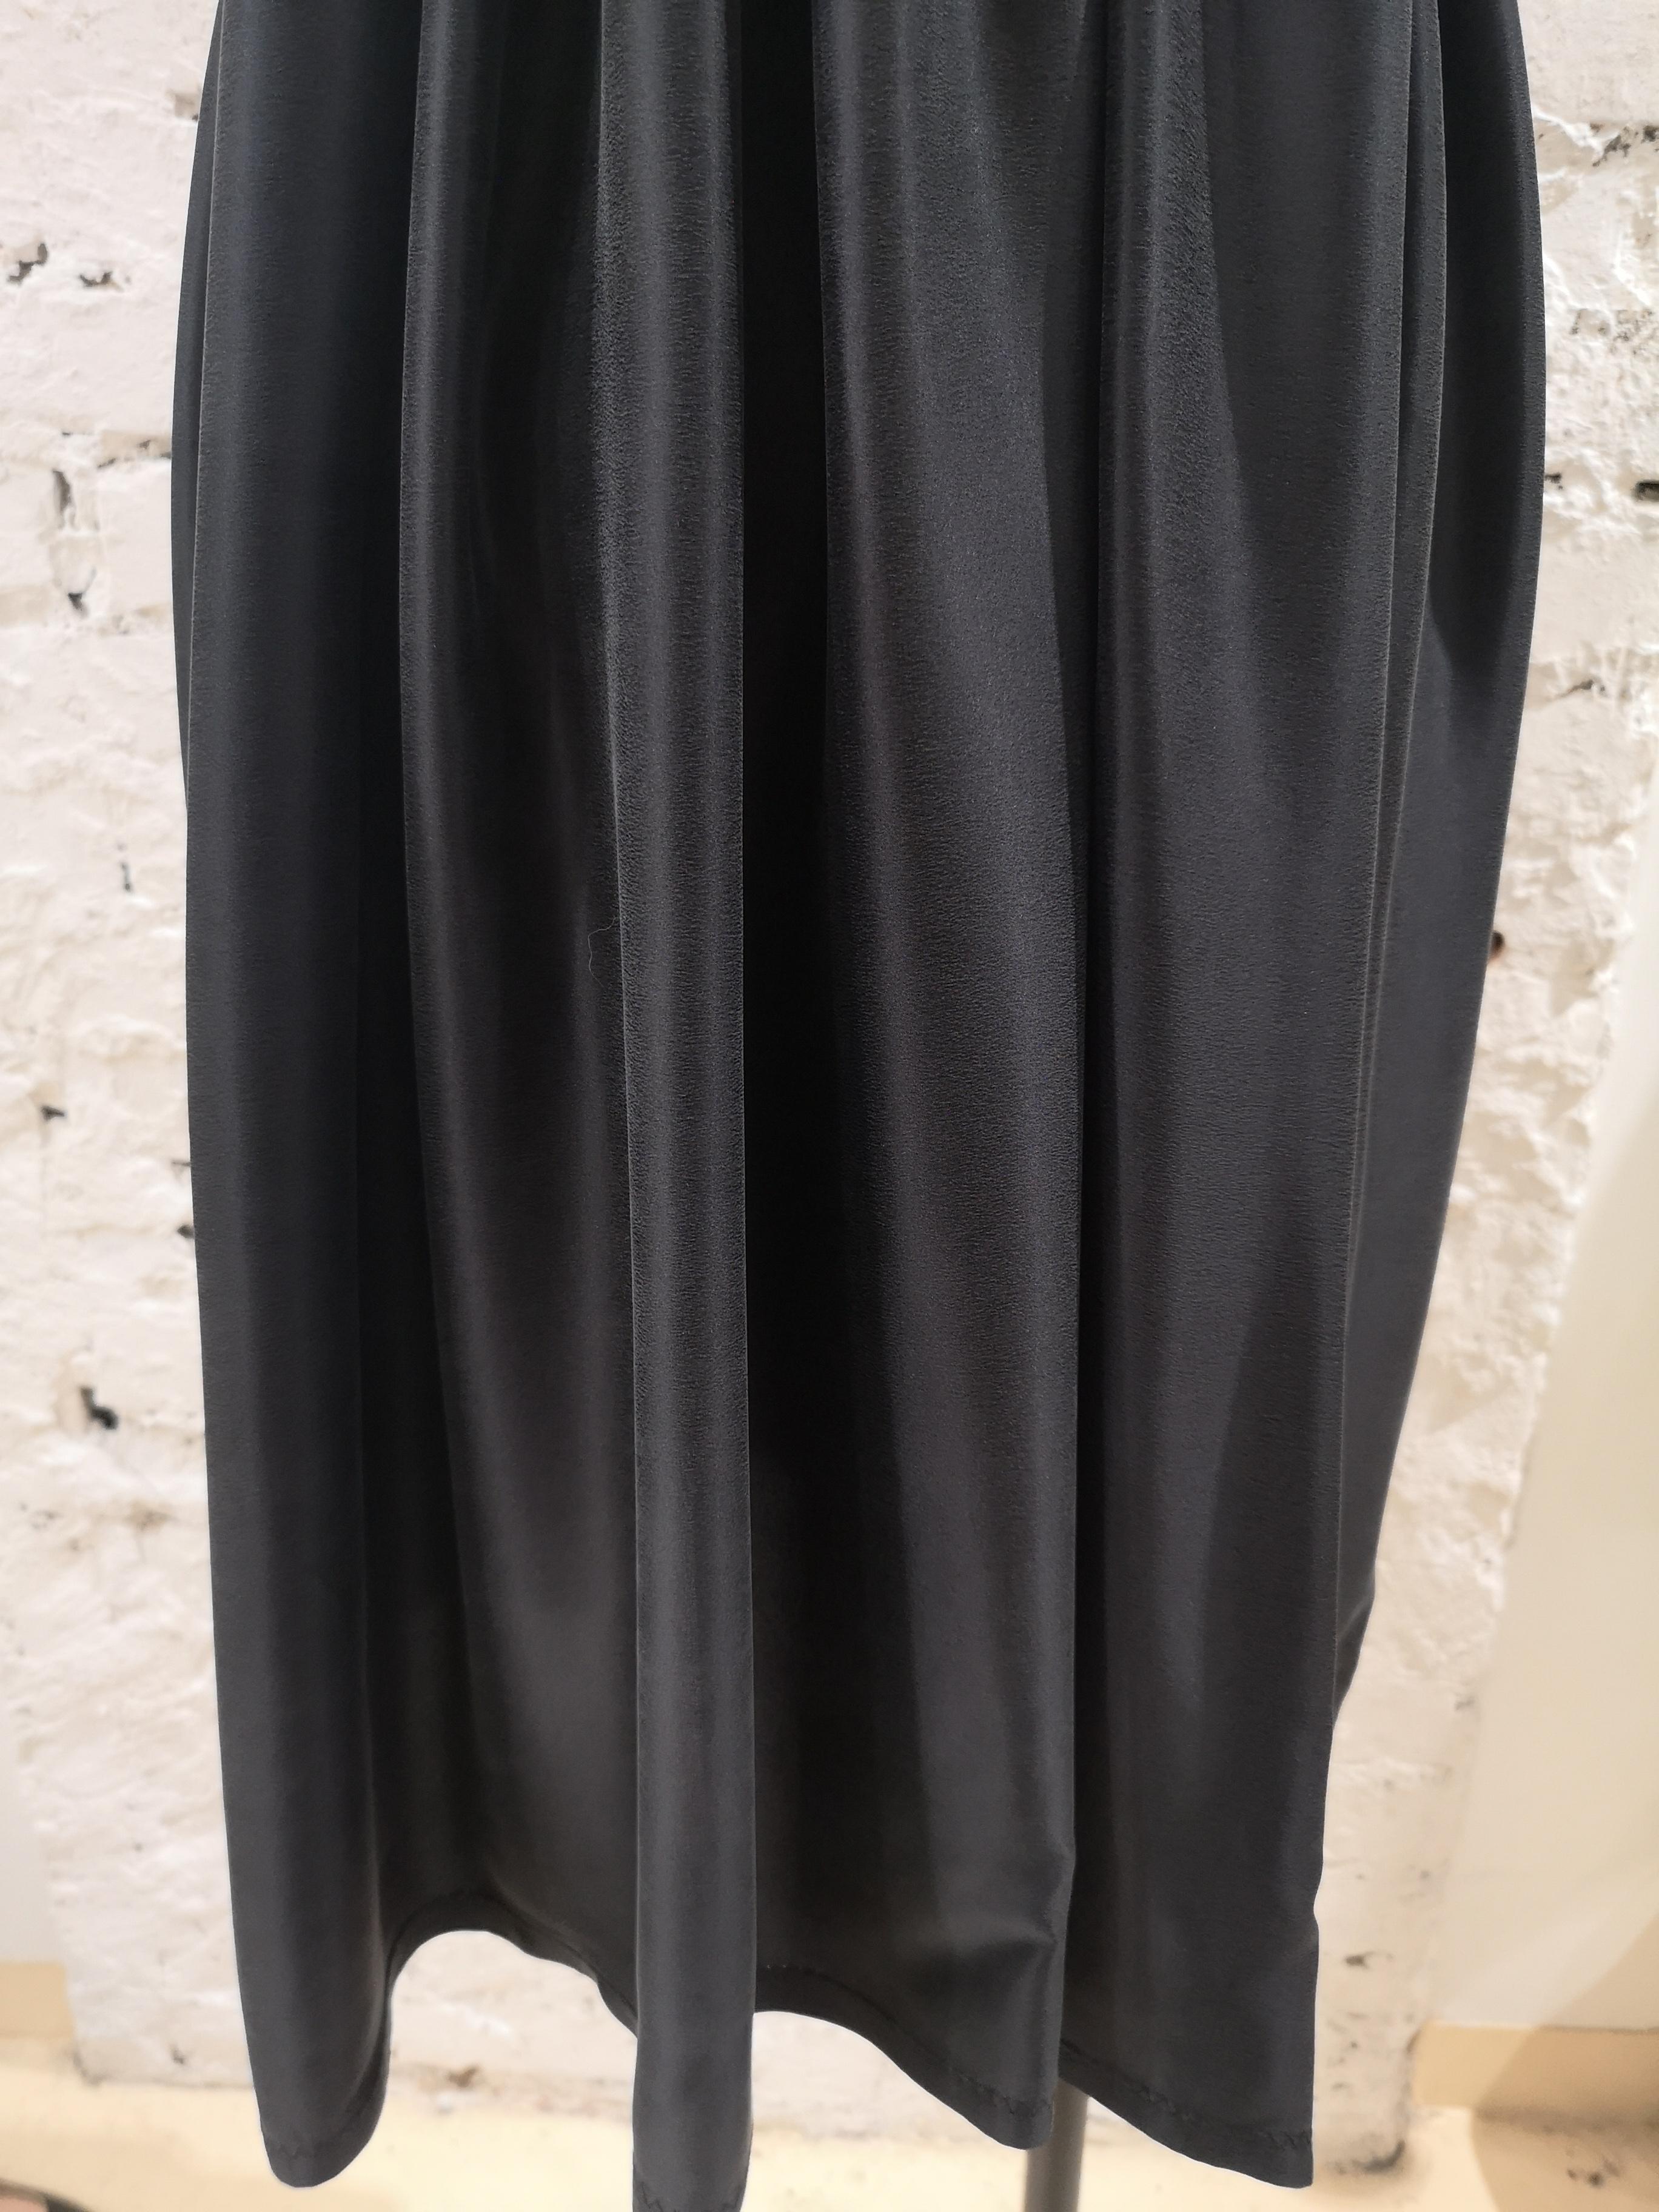 Vintage black dress
Alldressedup
Size S 